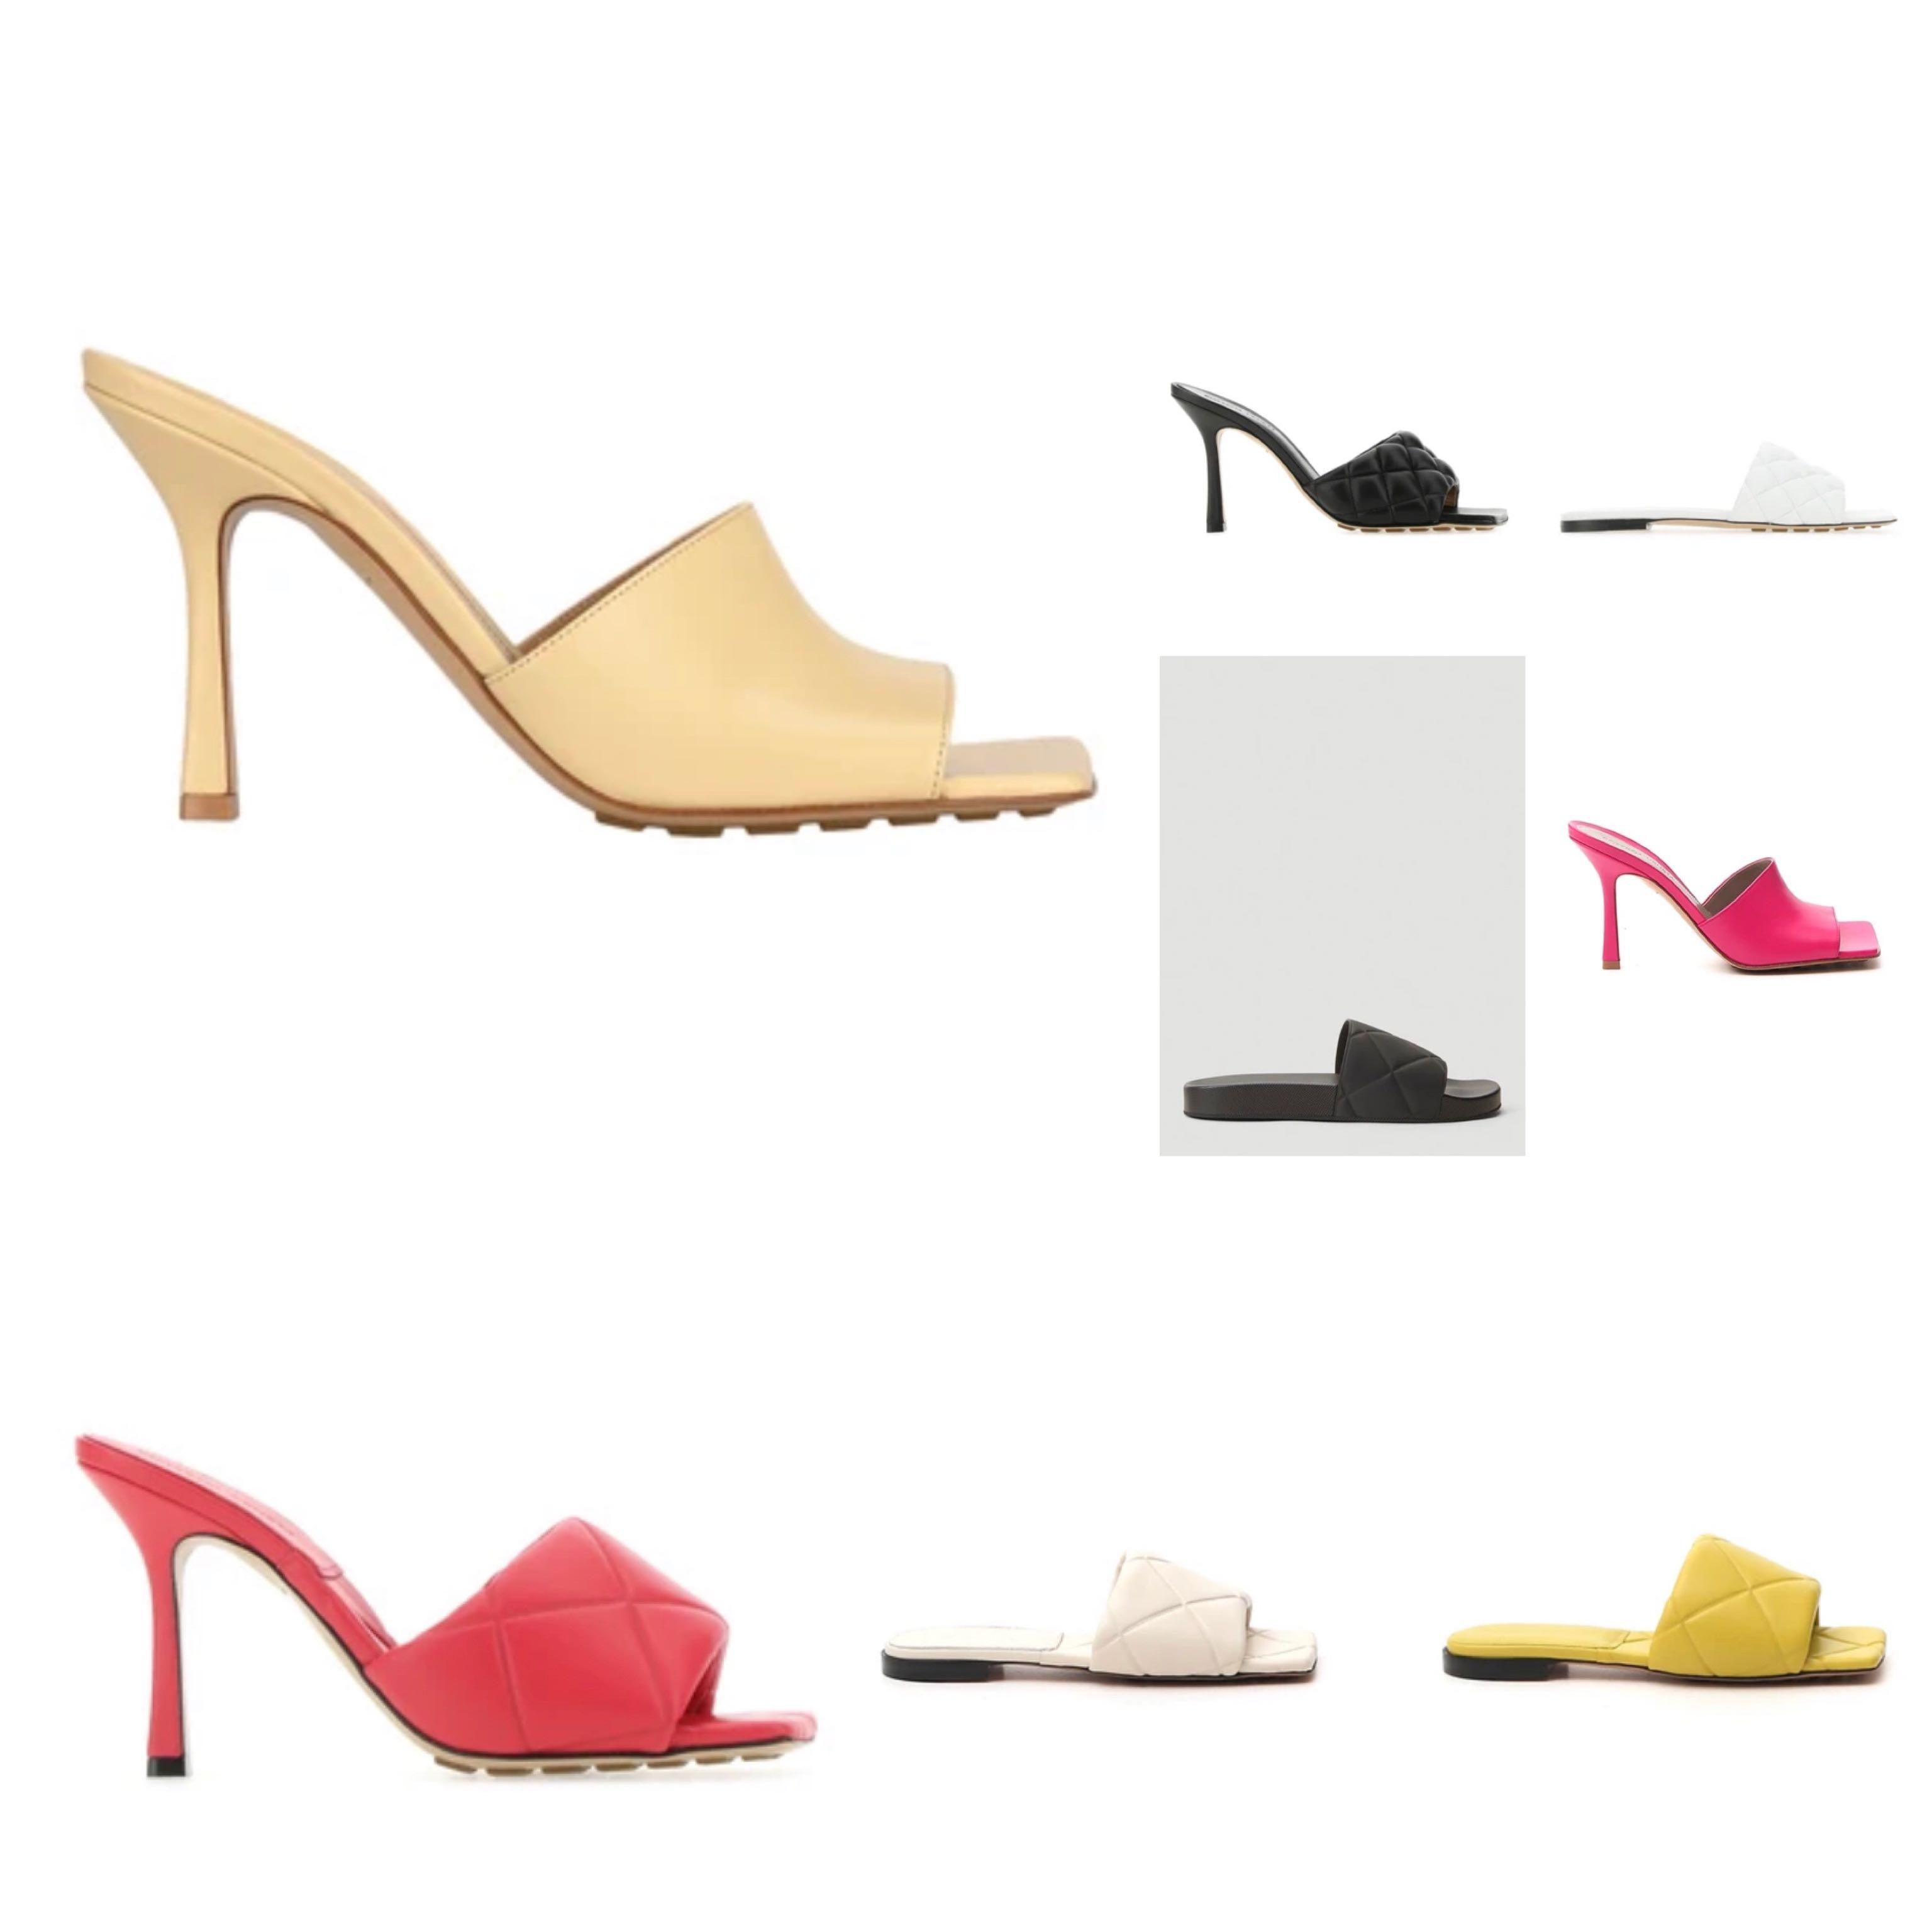 Brand New Sale Bottega Veneta Sandals Lido Slides From Europeeee Women S Fashion Footwear Heels On Carousell